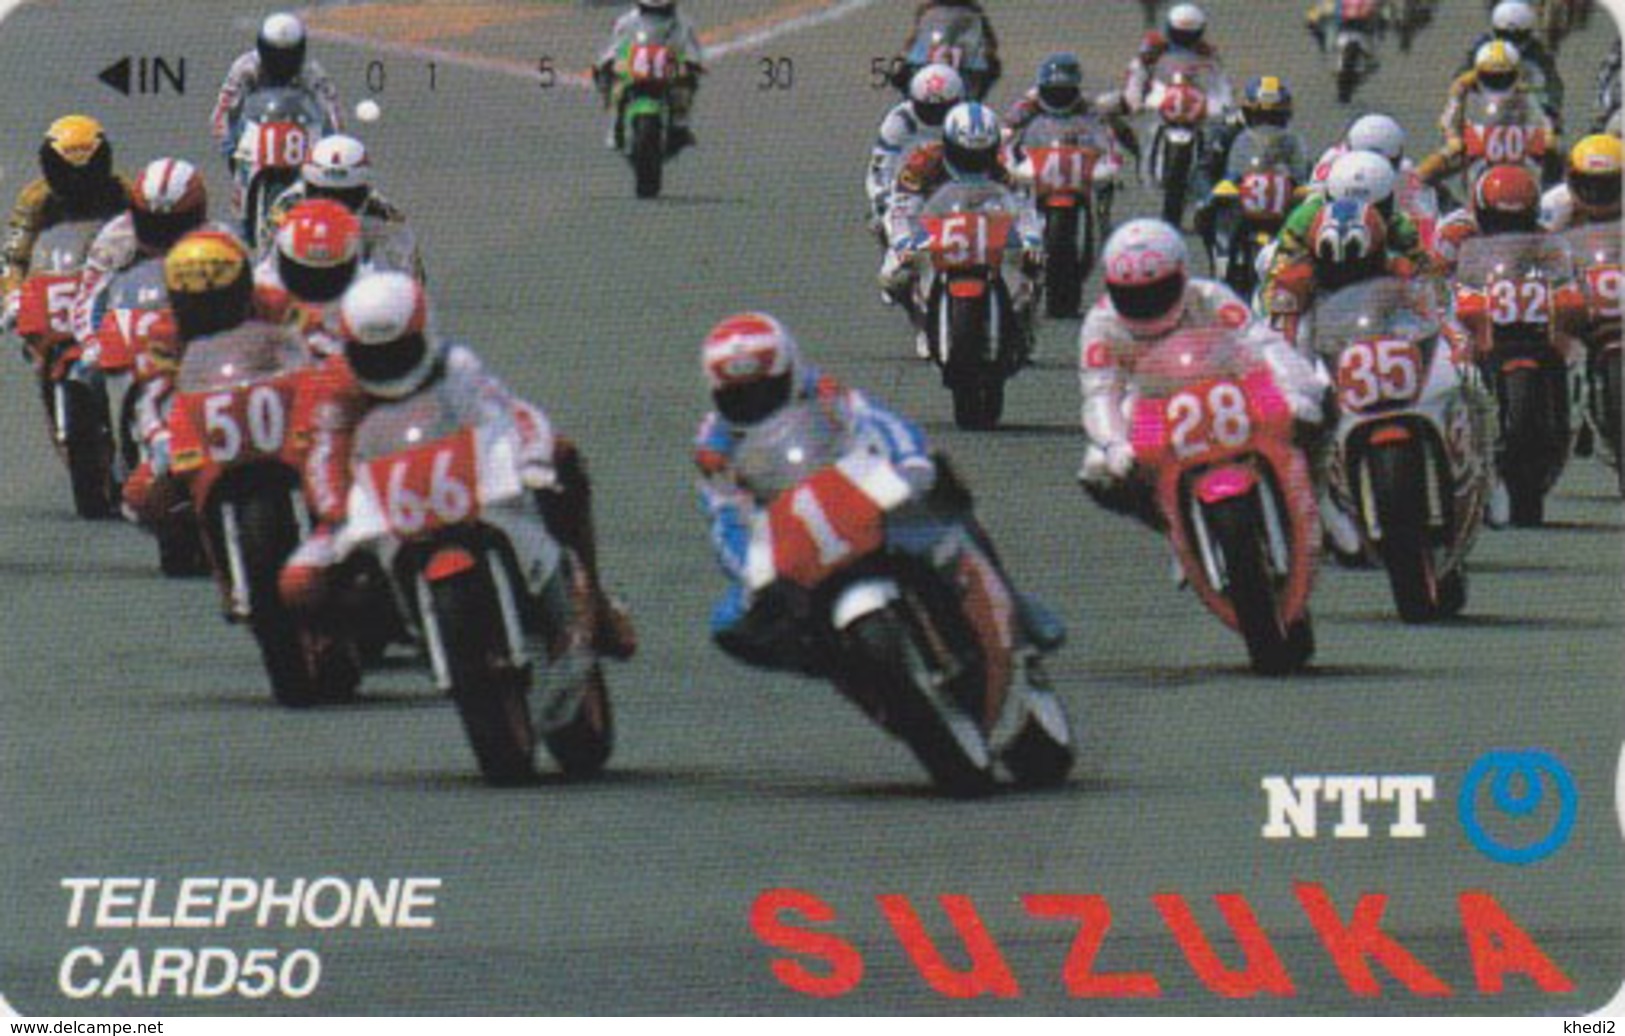 Télécarte Japon / NTT 290-038 ** ONE PUNCH ** - MOTO / SUZUKA - MOTOR BIKE RACE Japan Phonecard - Motorräder